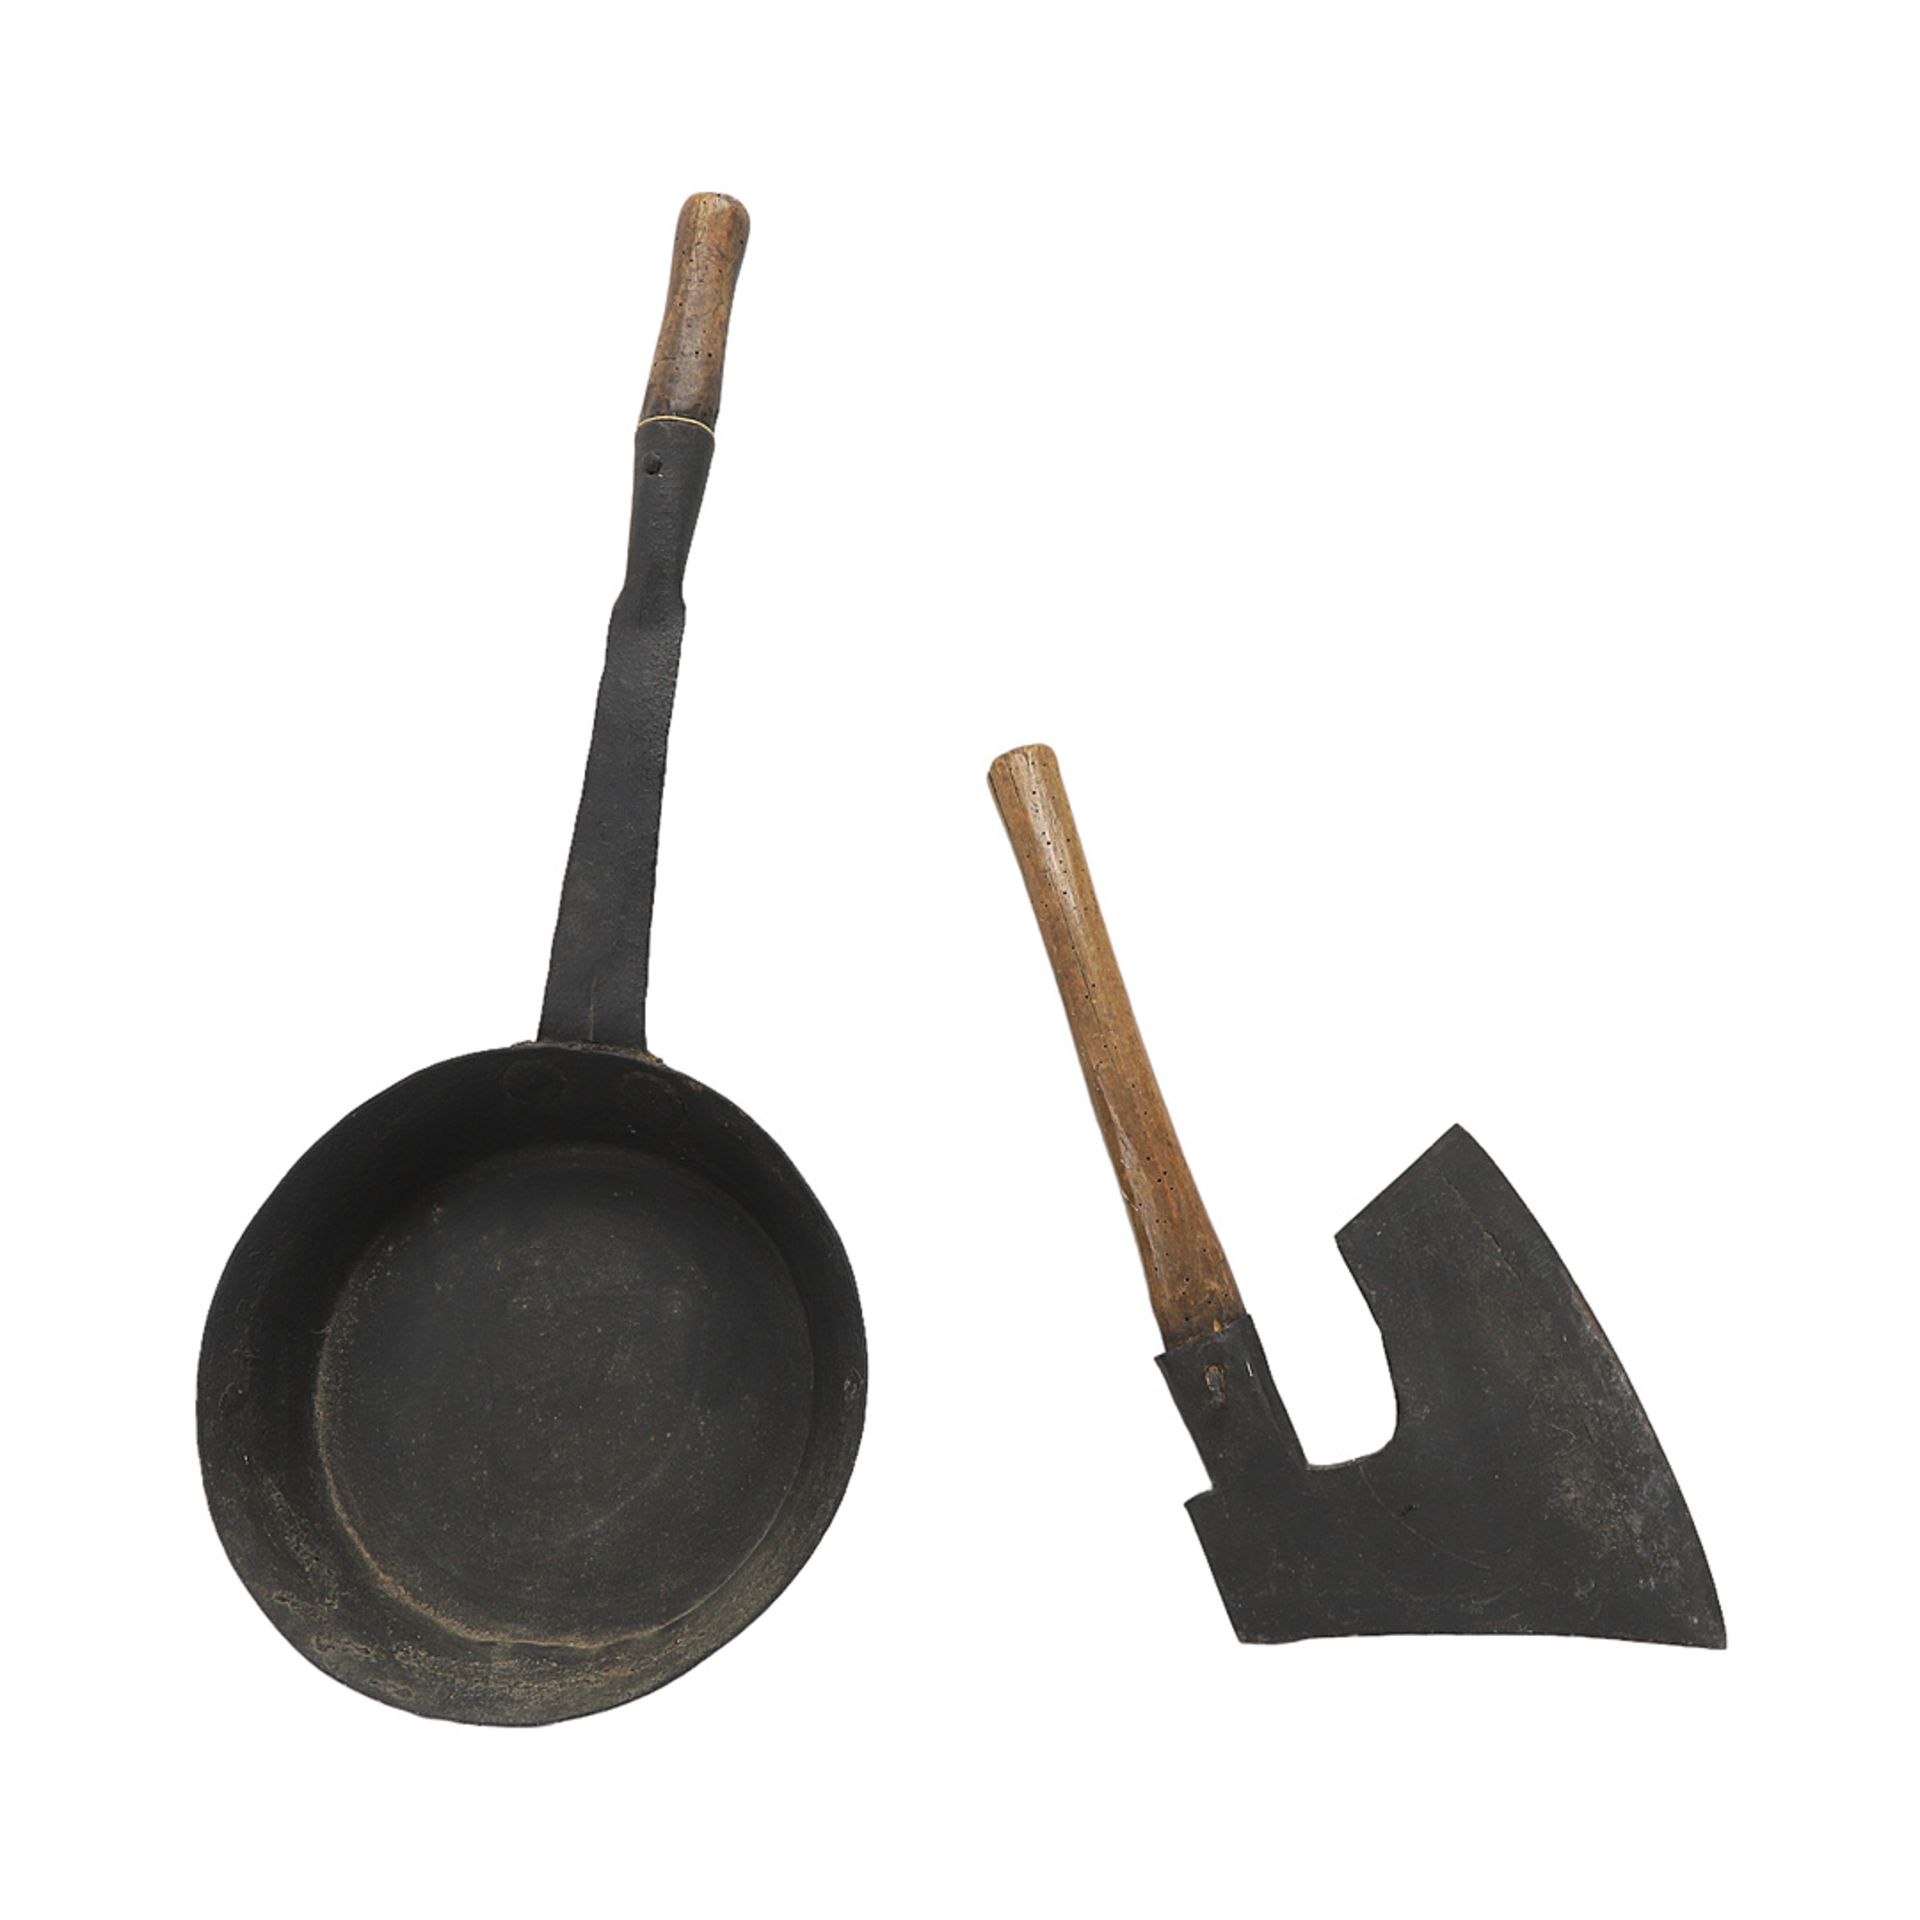 Saxon blacksmith, Pan and hatchet, 19th century